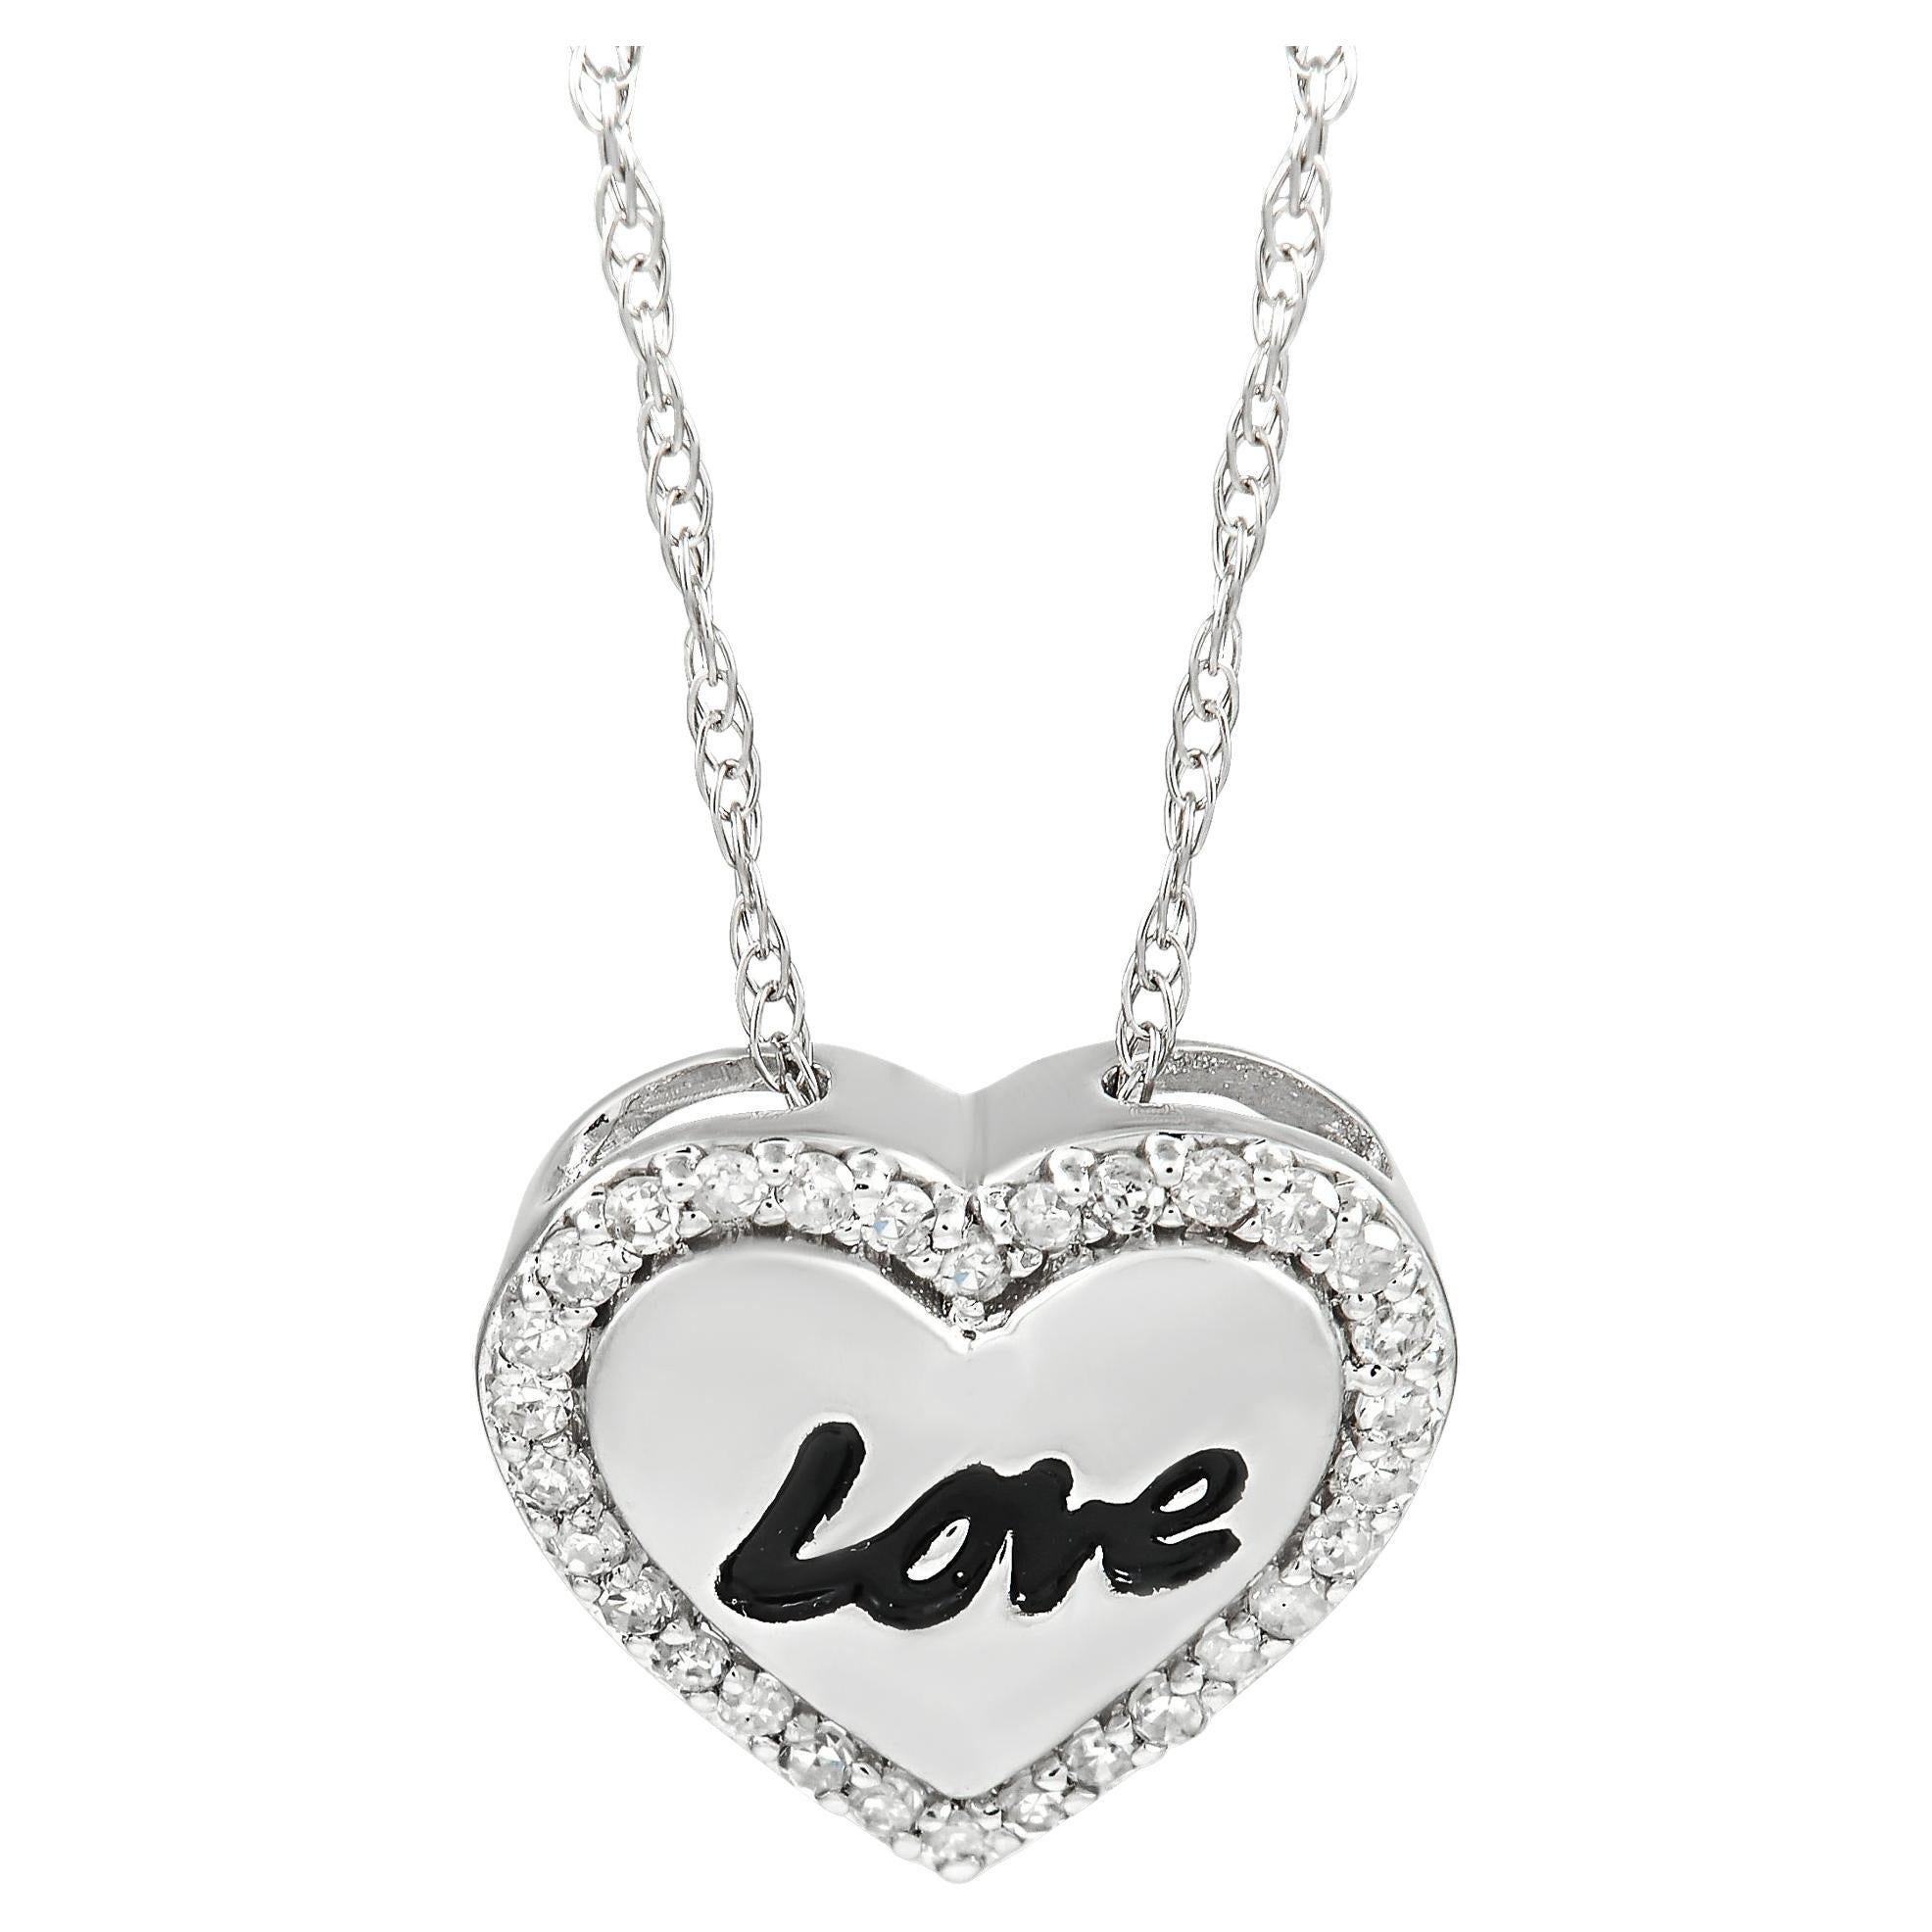 LB Exclusive 14K White Gold 0.10 Ct Diamond Love Heart Pendant Necklace